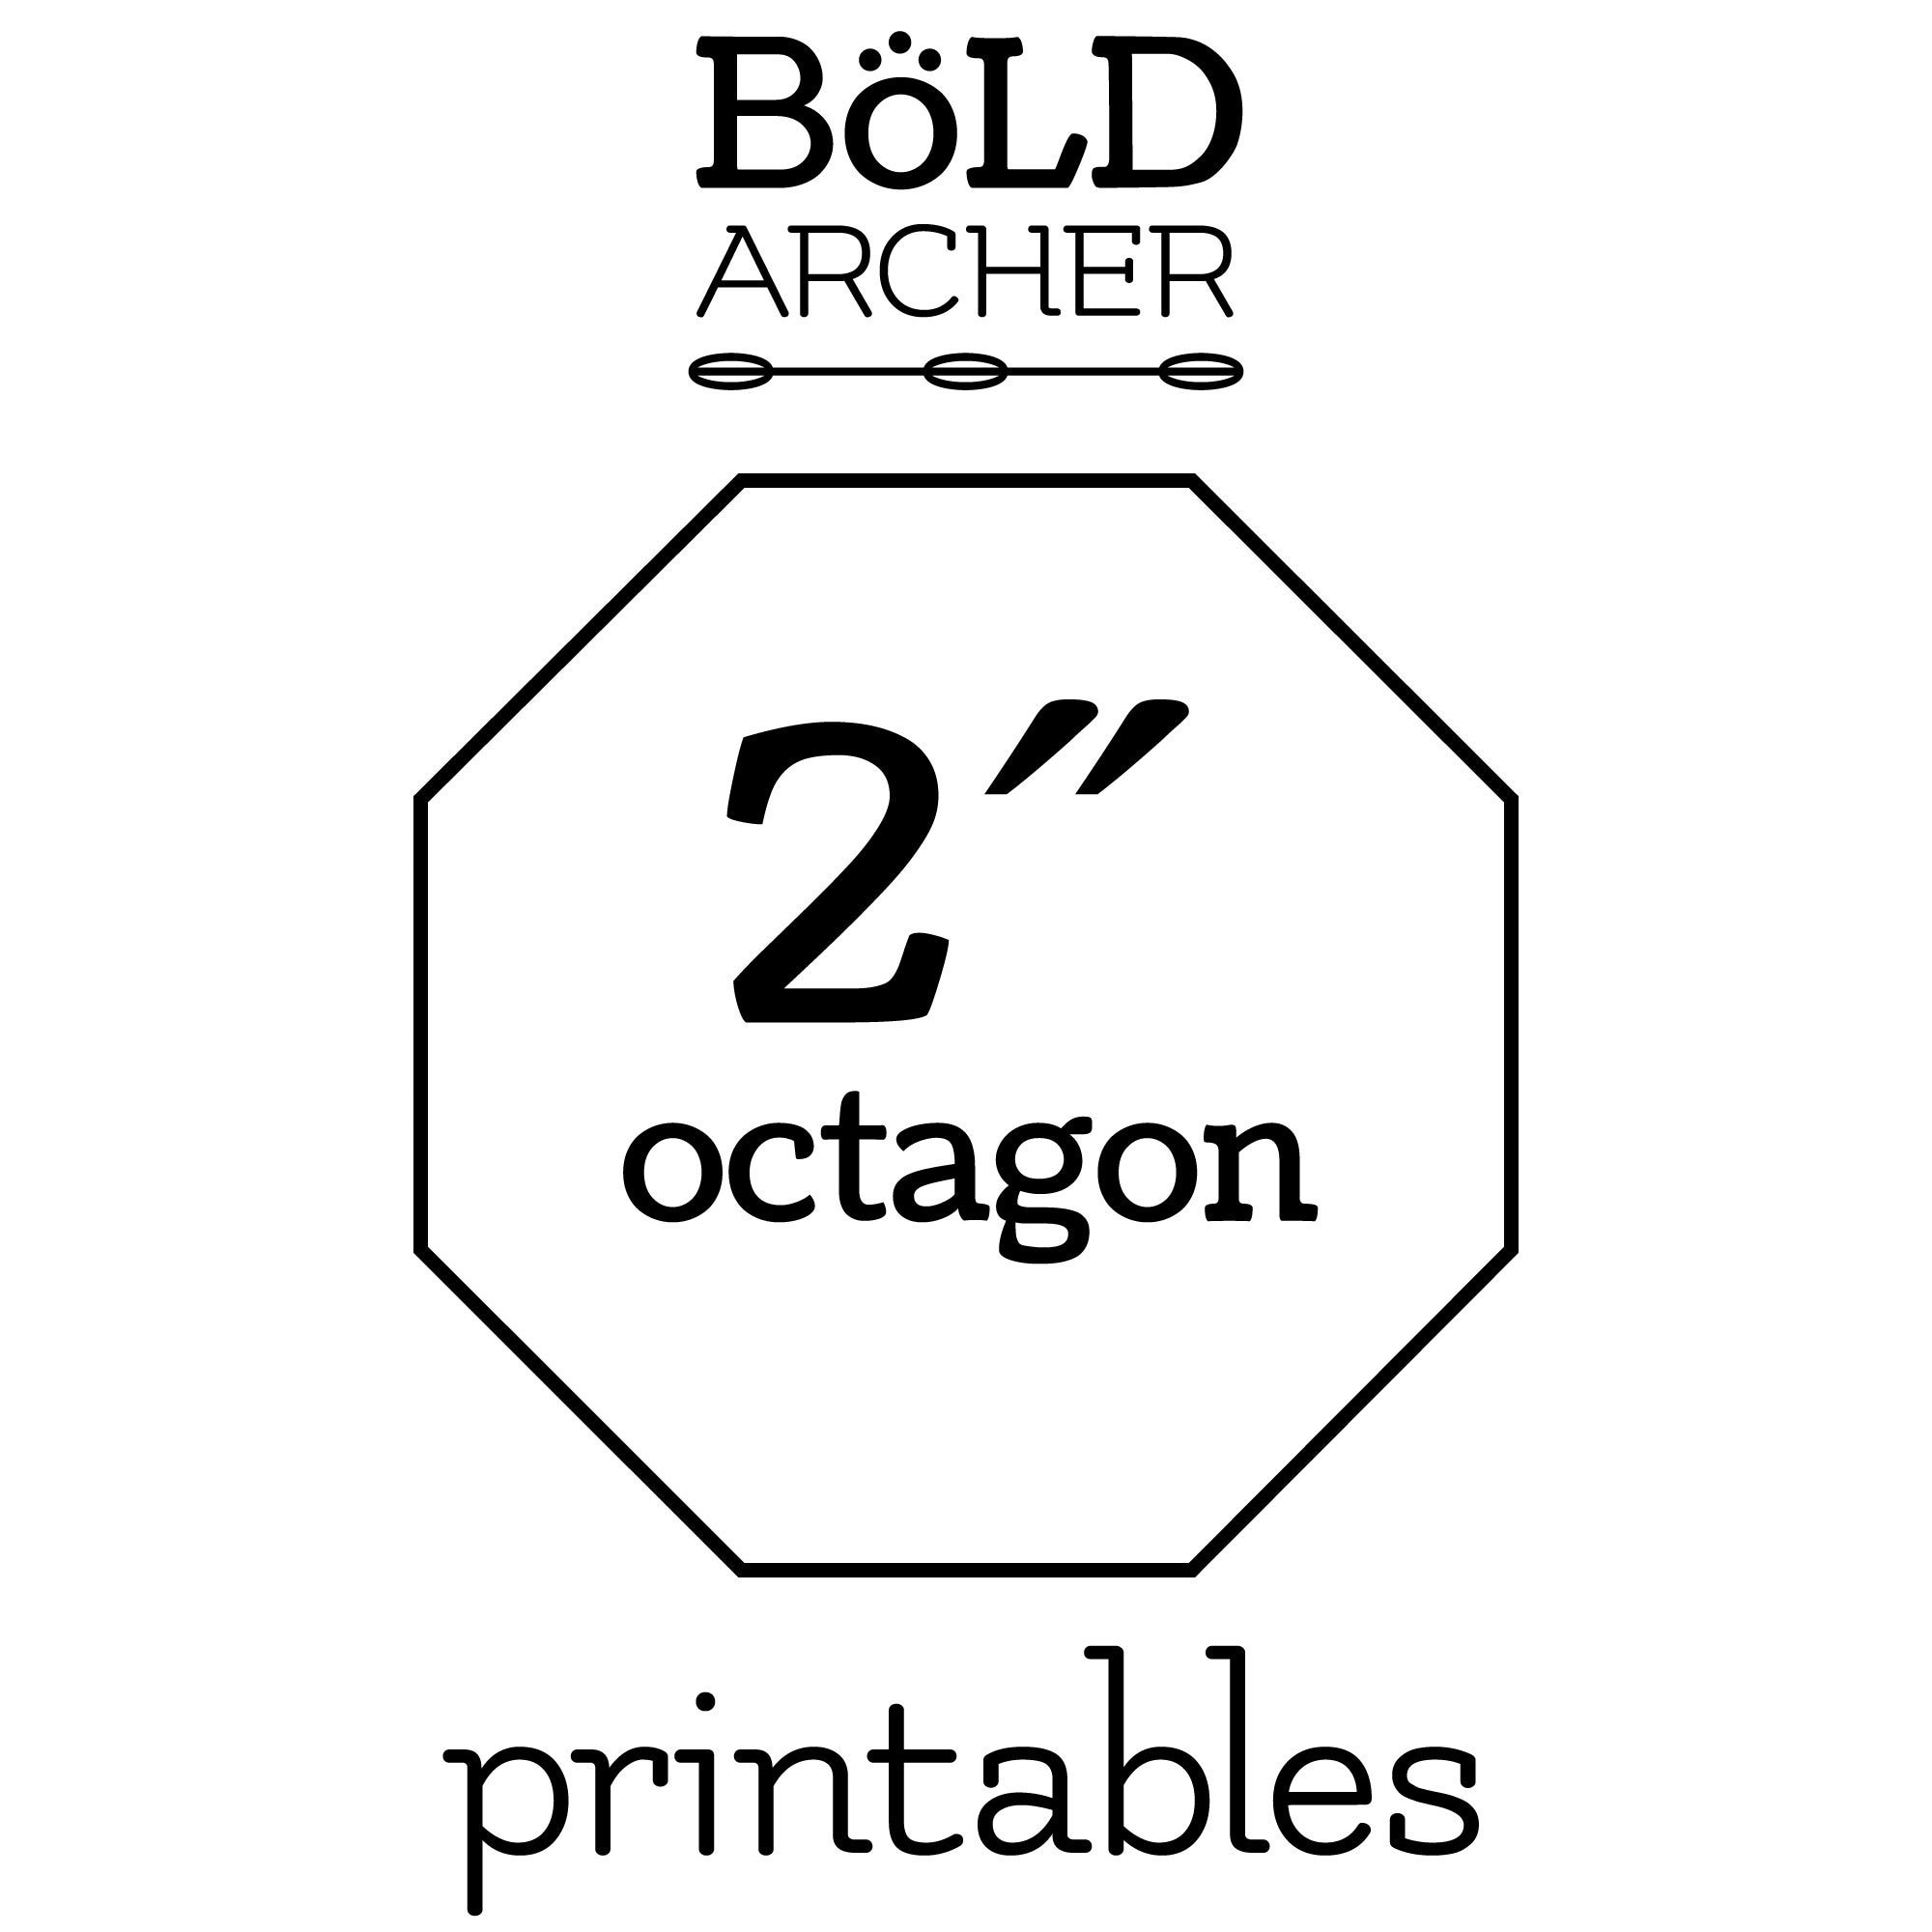 Printable octagon